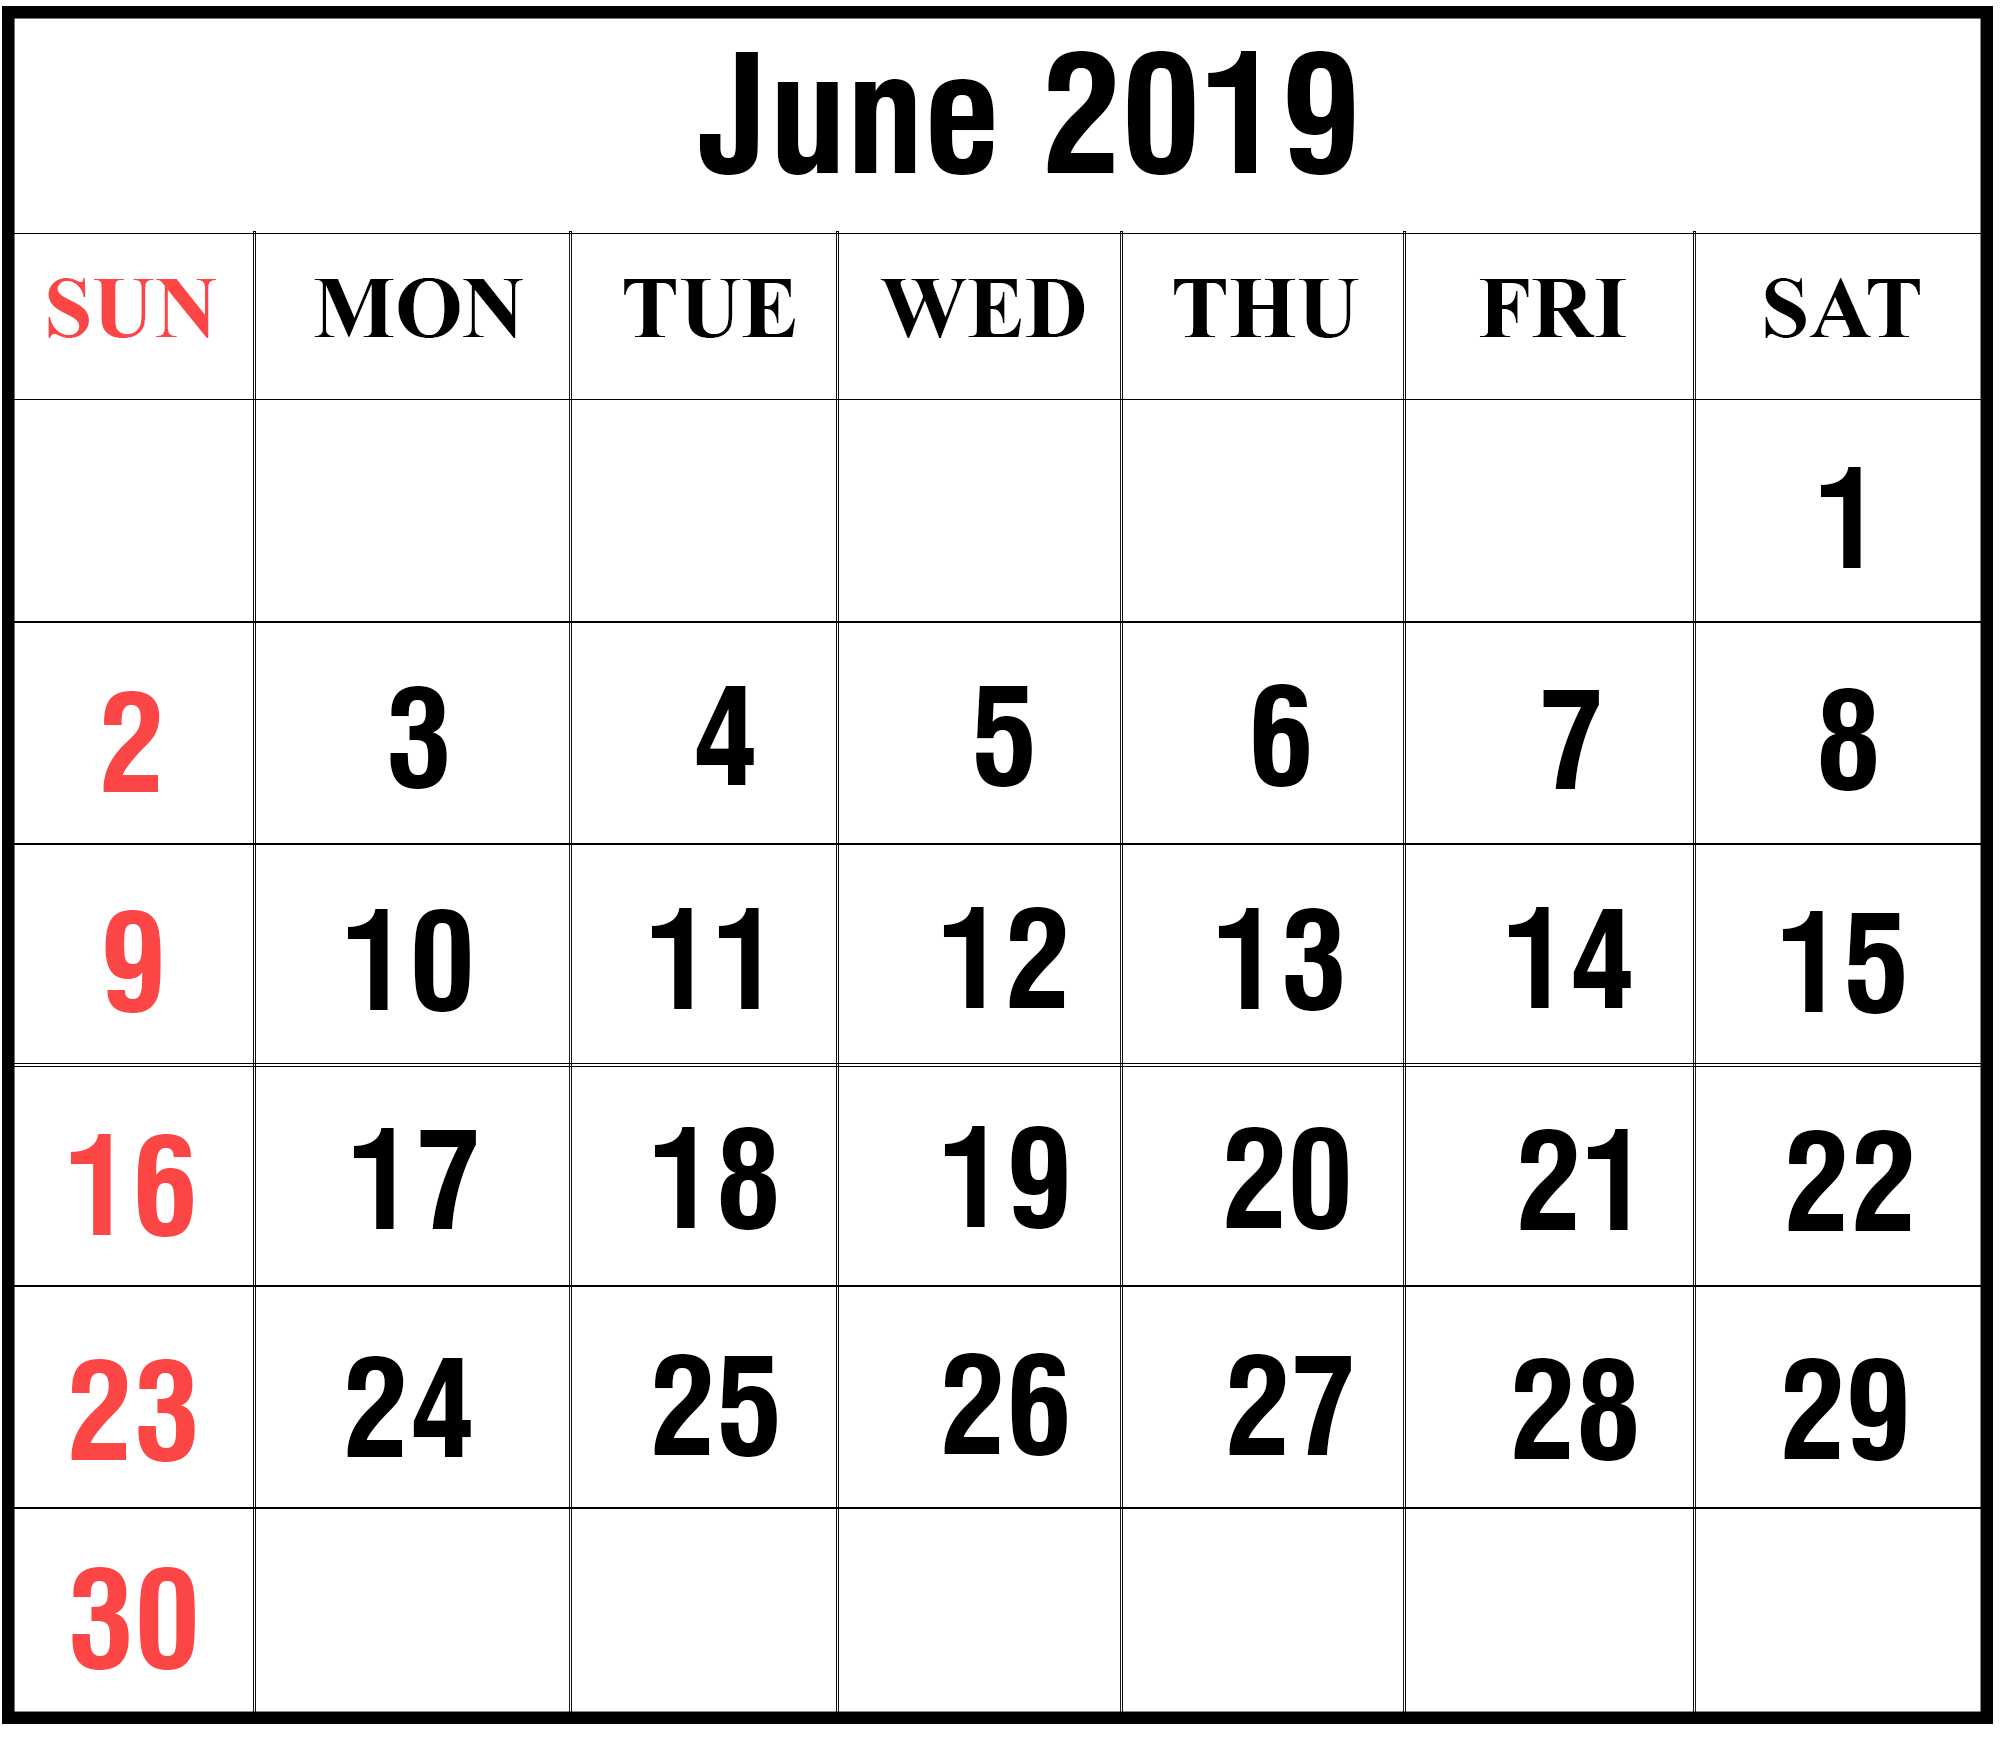 2020 June Holidays Calendar 